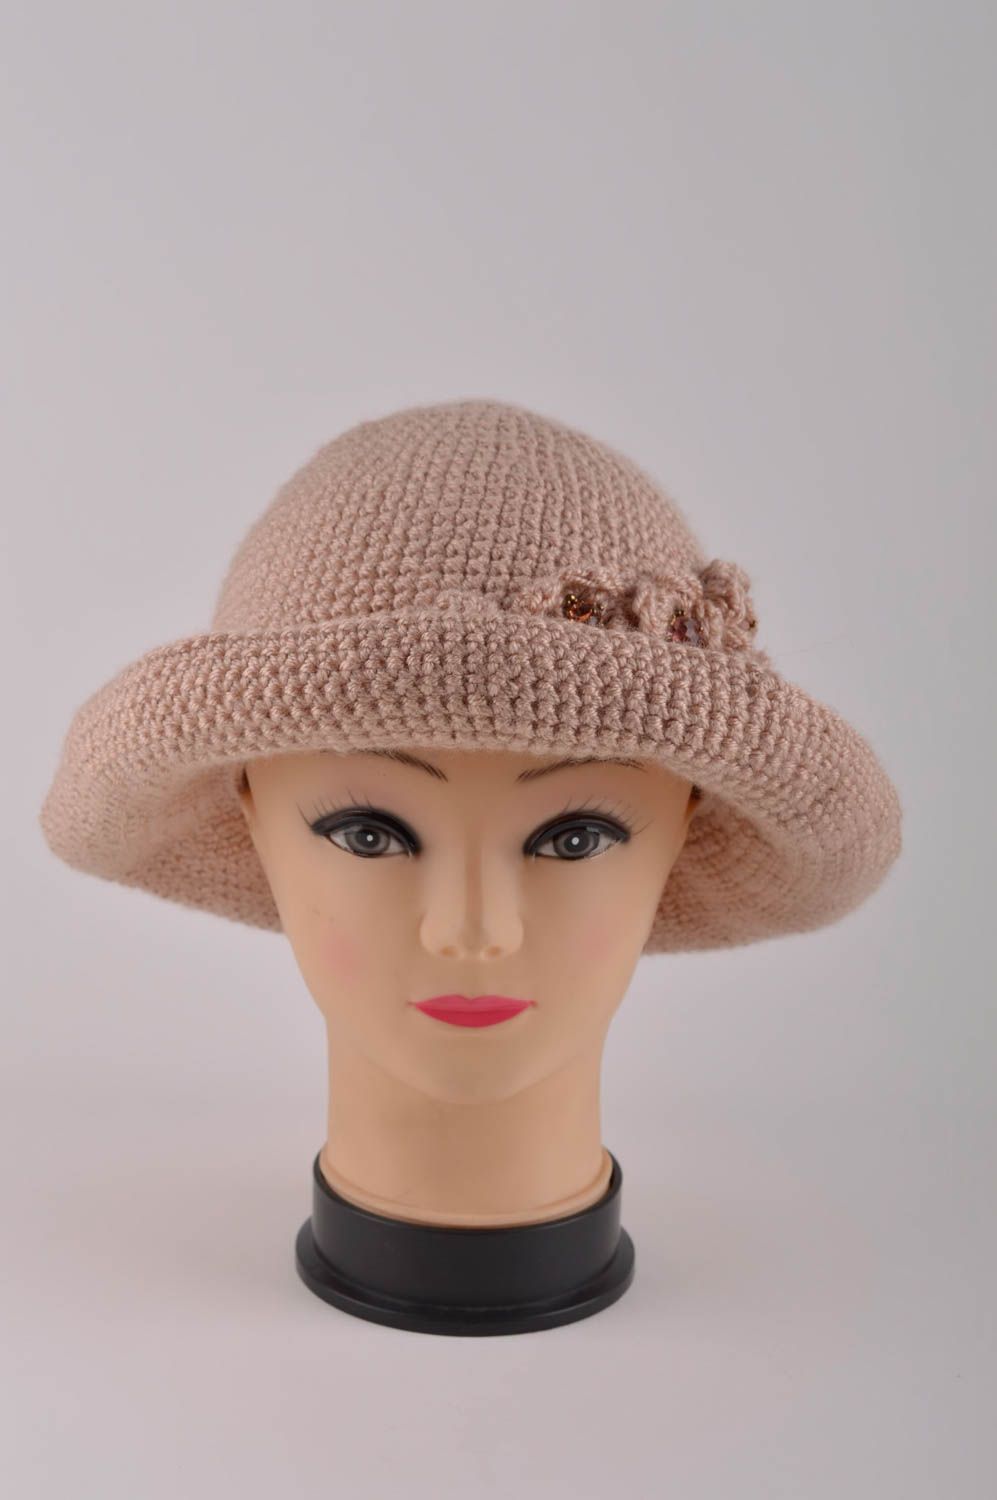 Handmade sun hat ladies sun hat fashion accessories gifts for women summer hat photo 3